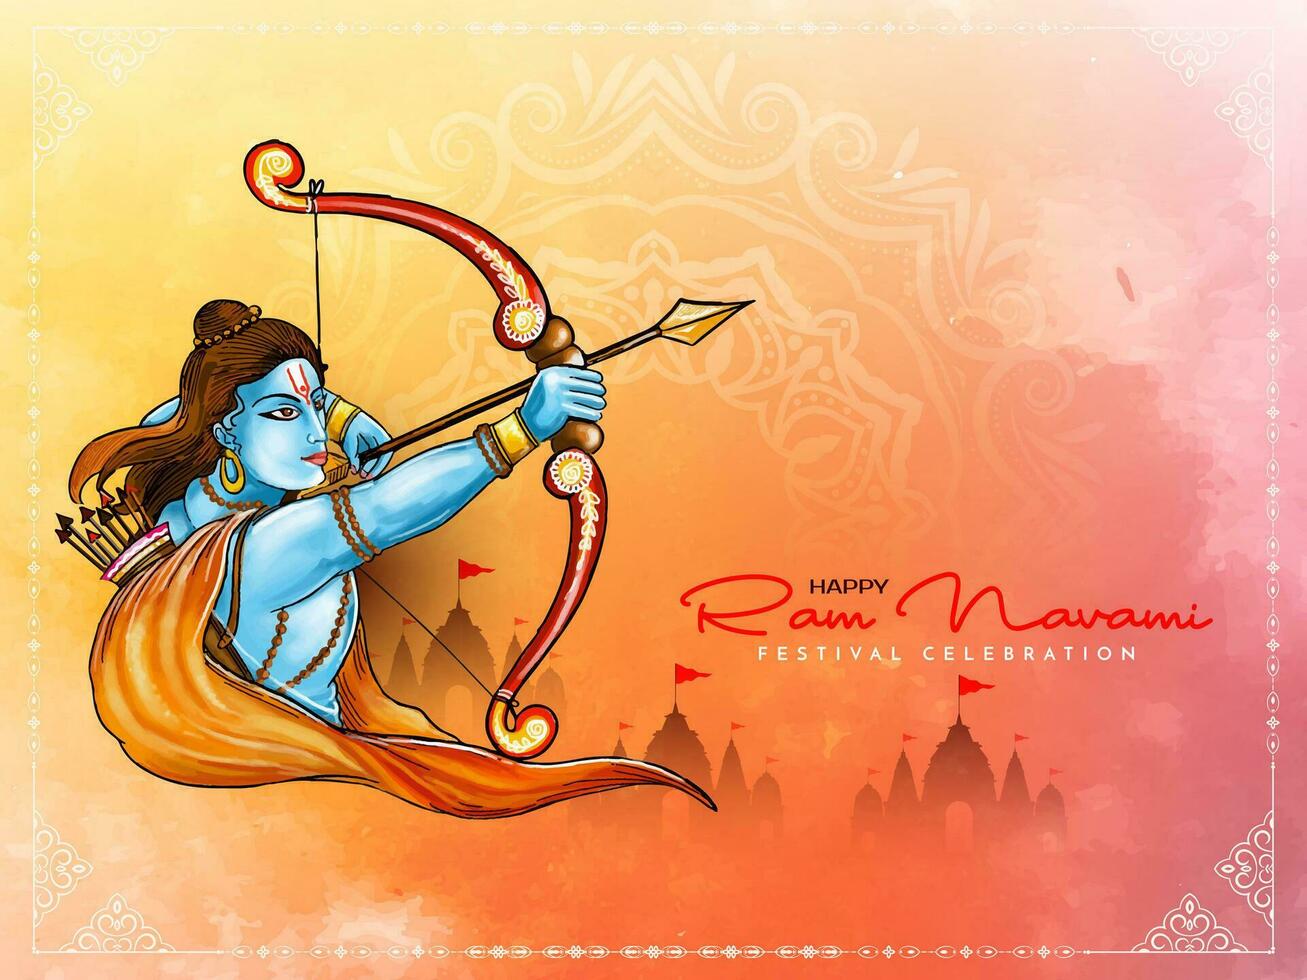 traditionell glücklich RAM Navami Hindu Festival Gruß Karte Design vektor